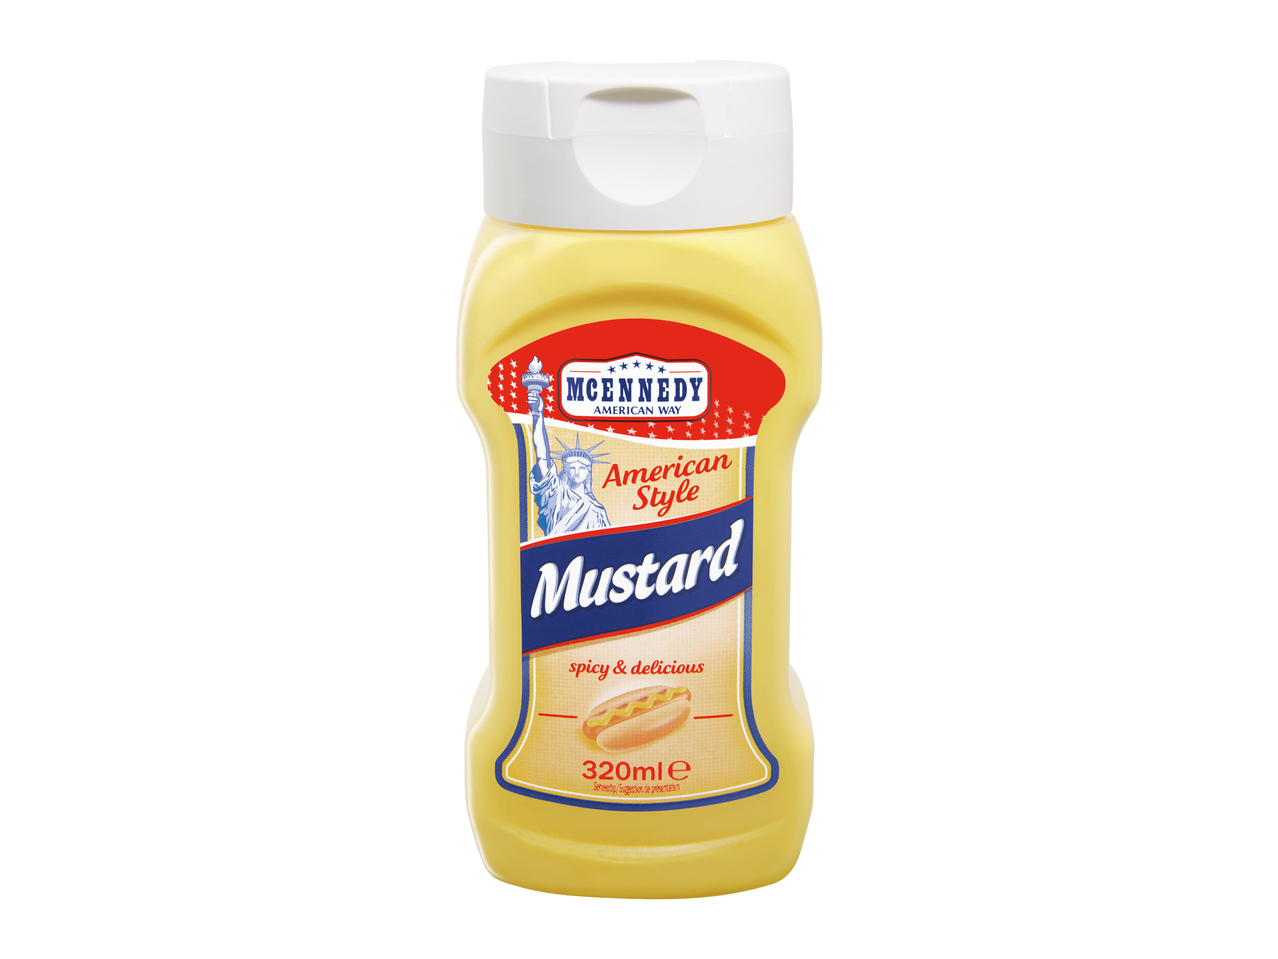 American mustard